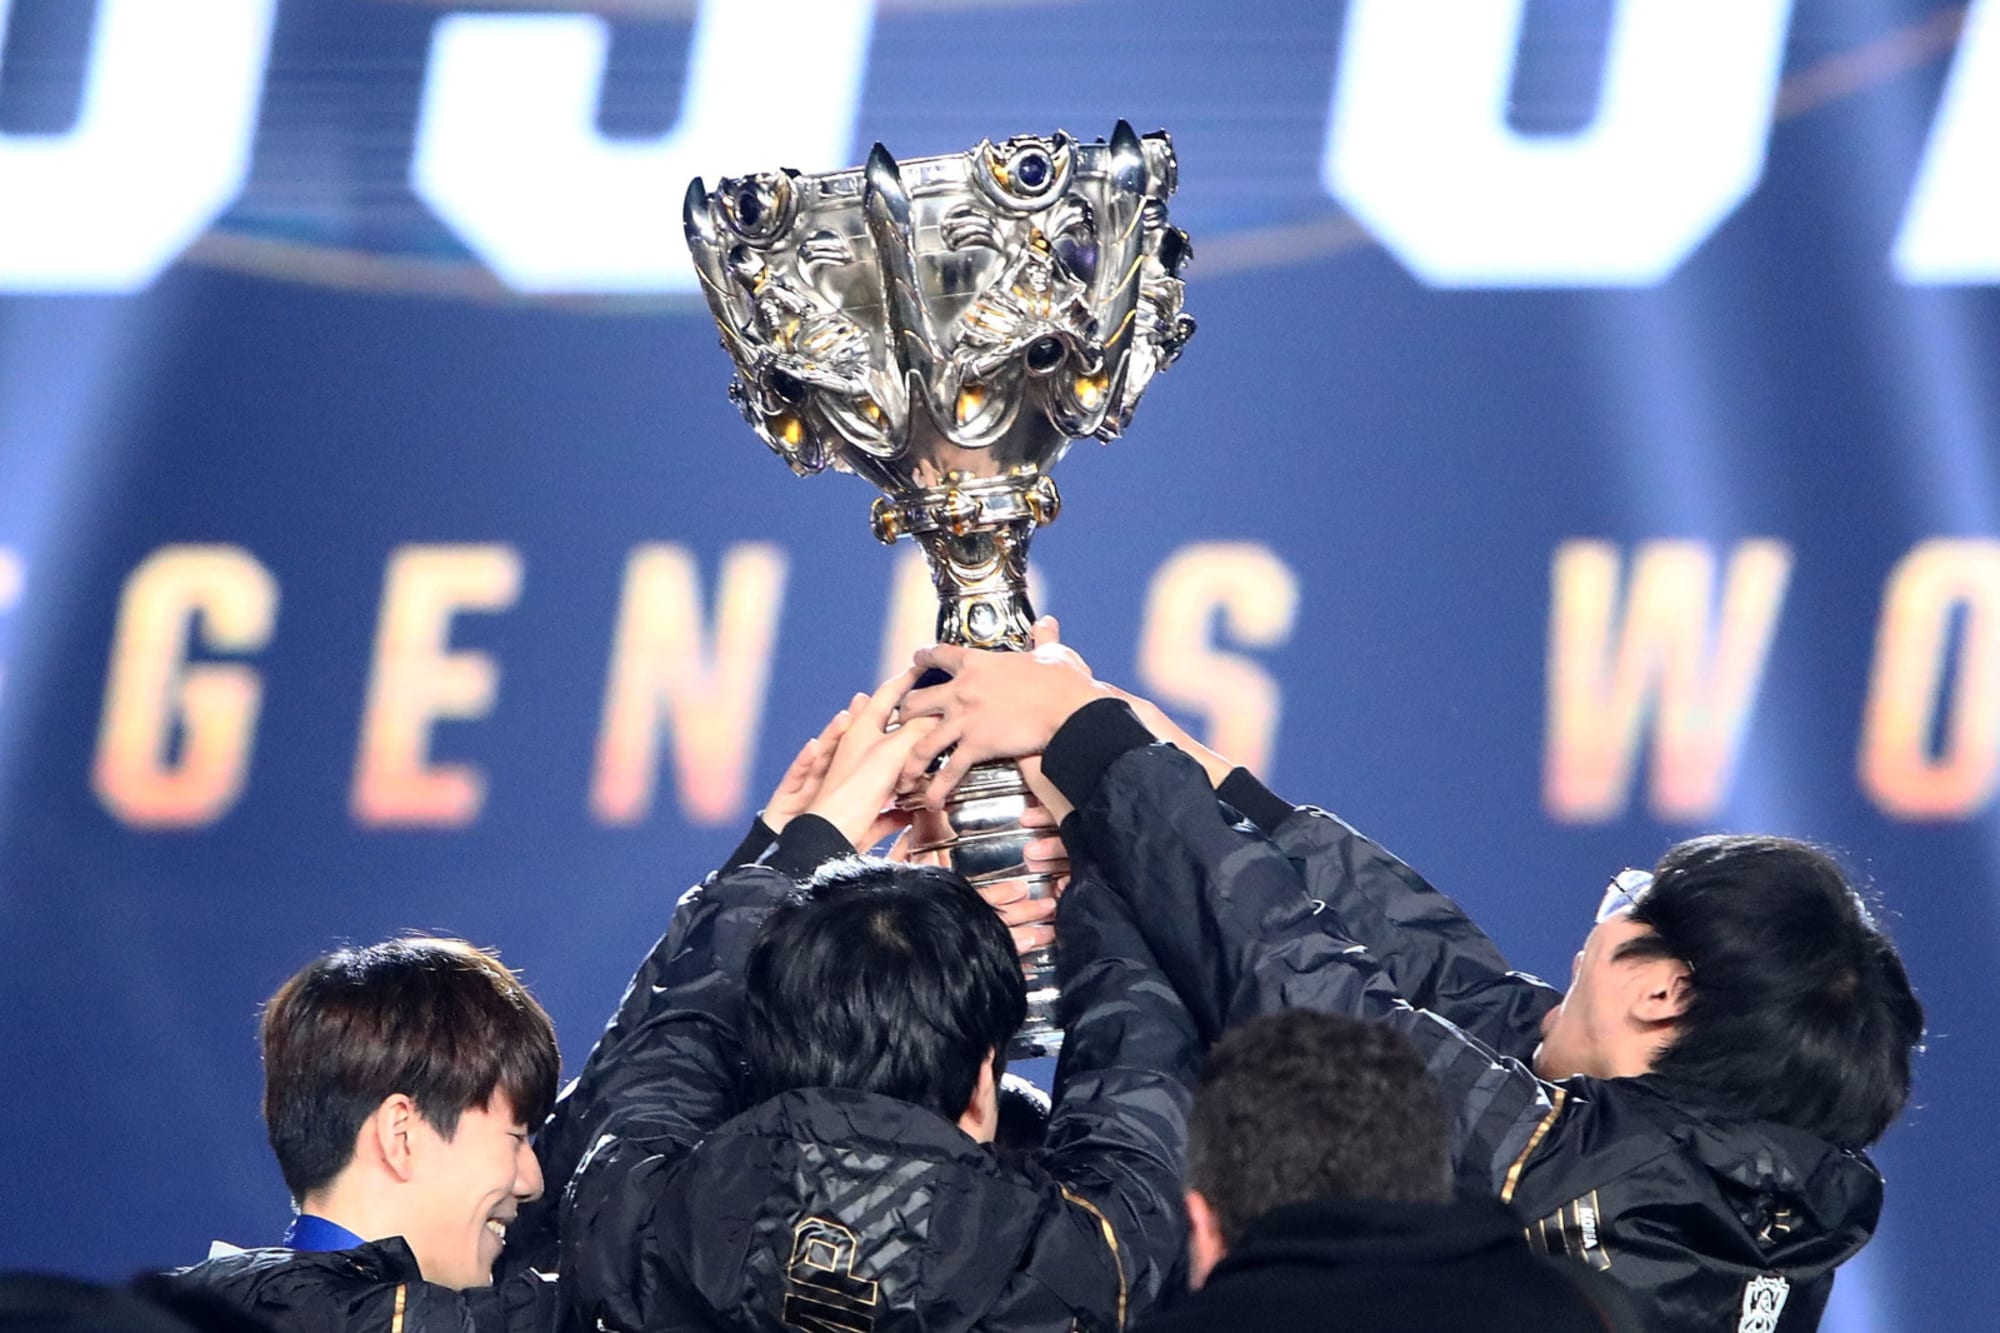 league of legends worlds trophy